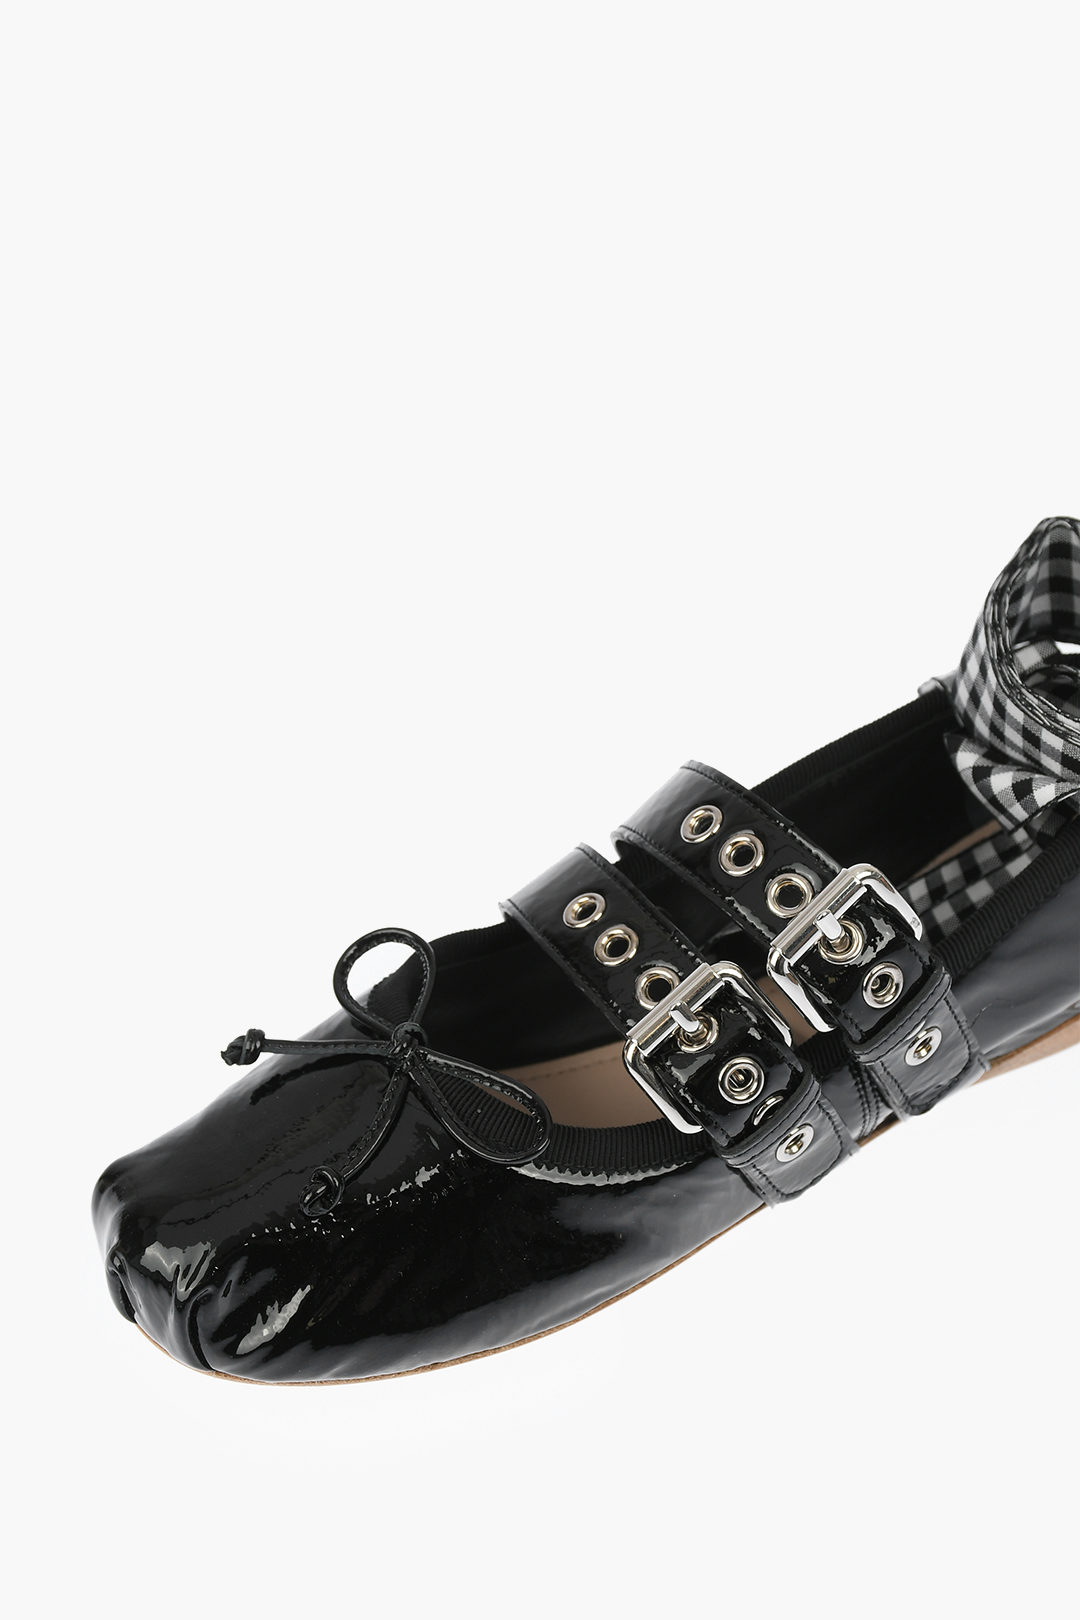 Black Ribbon-strap buckled patent-leather ballet flats, Miu Miu